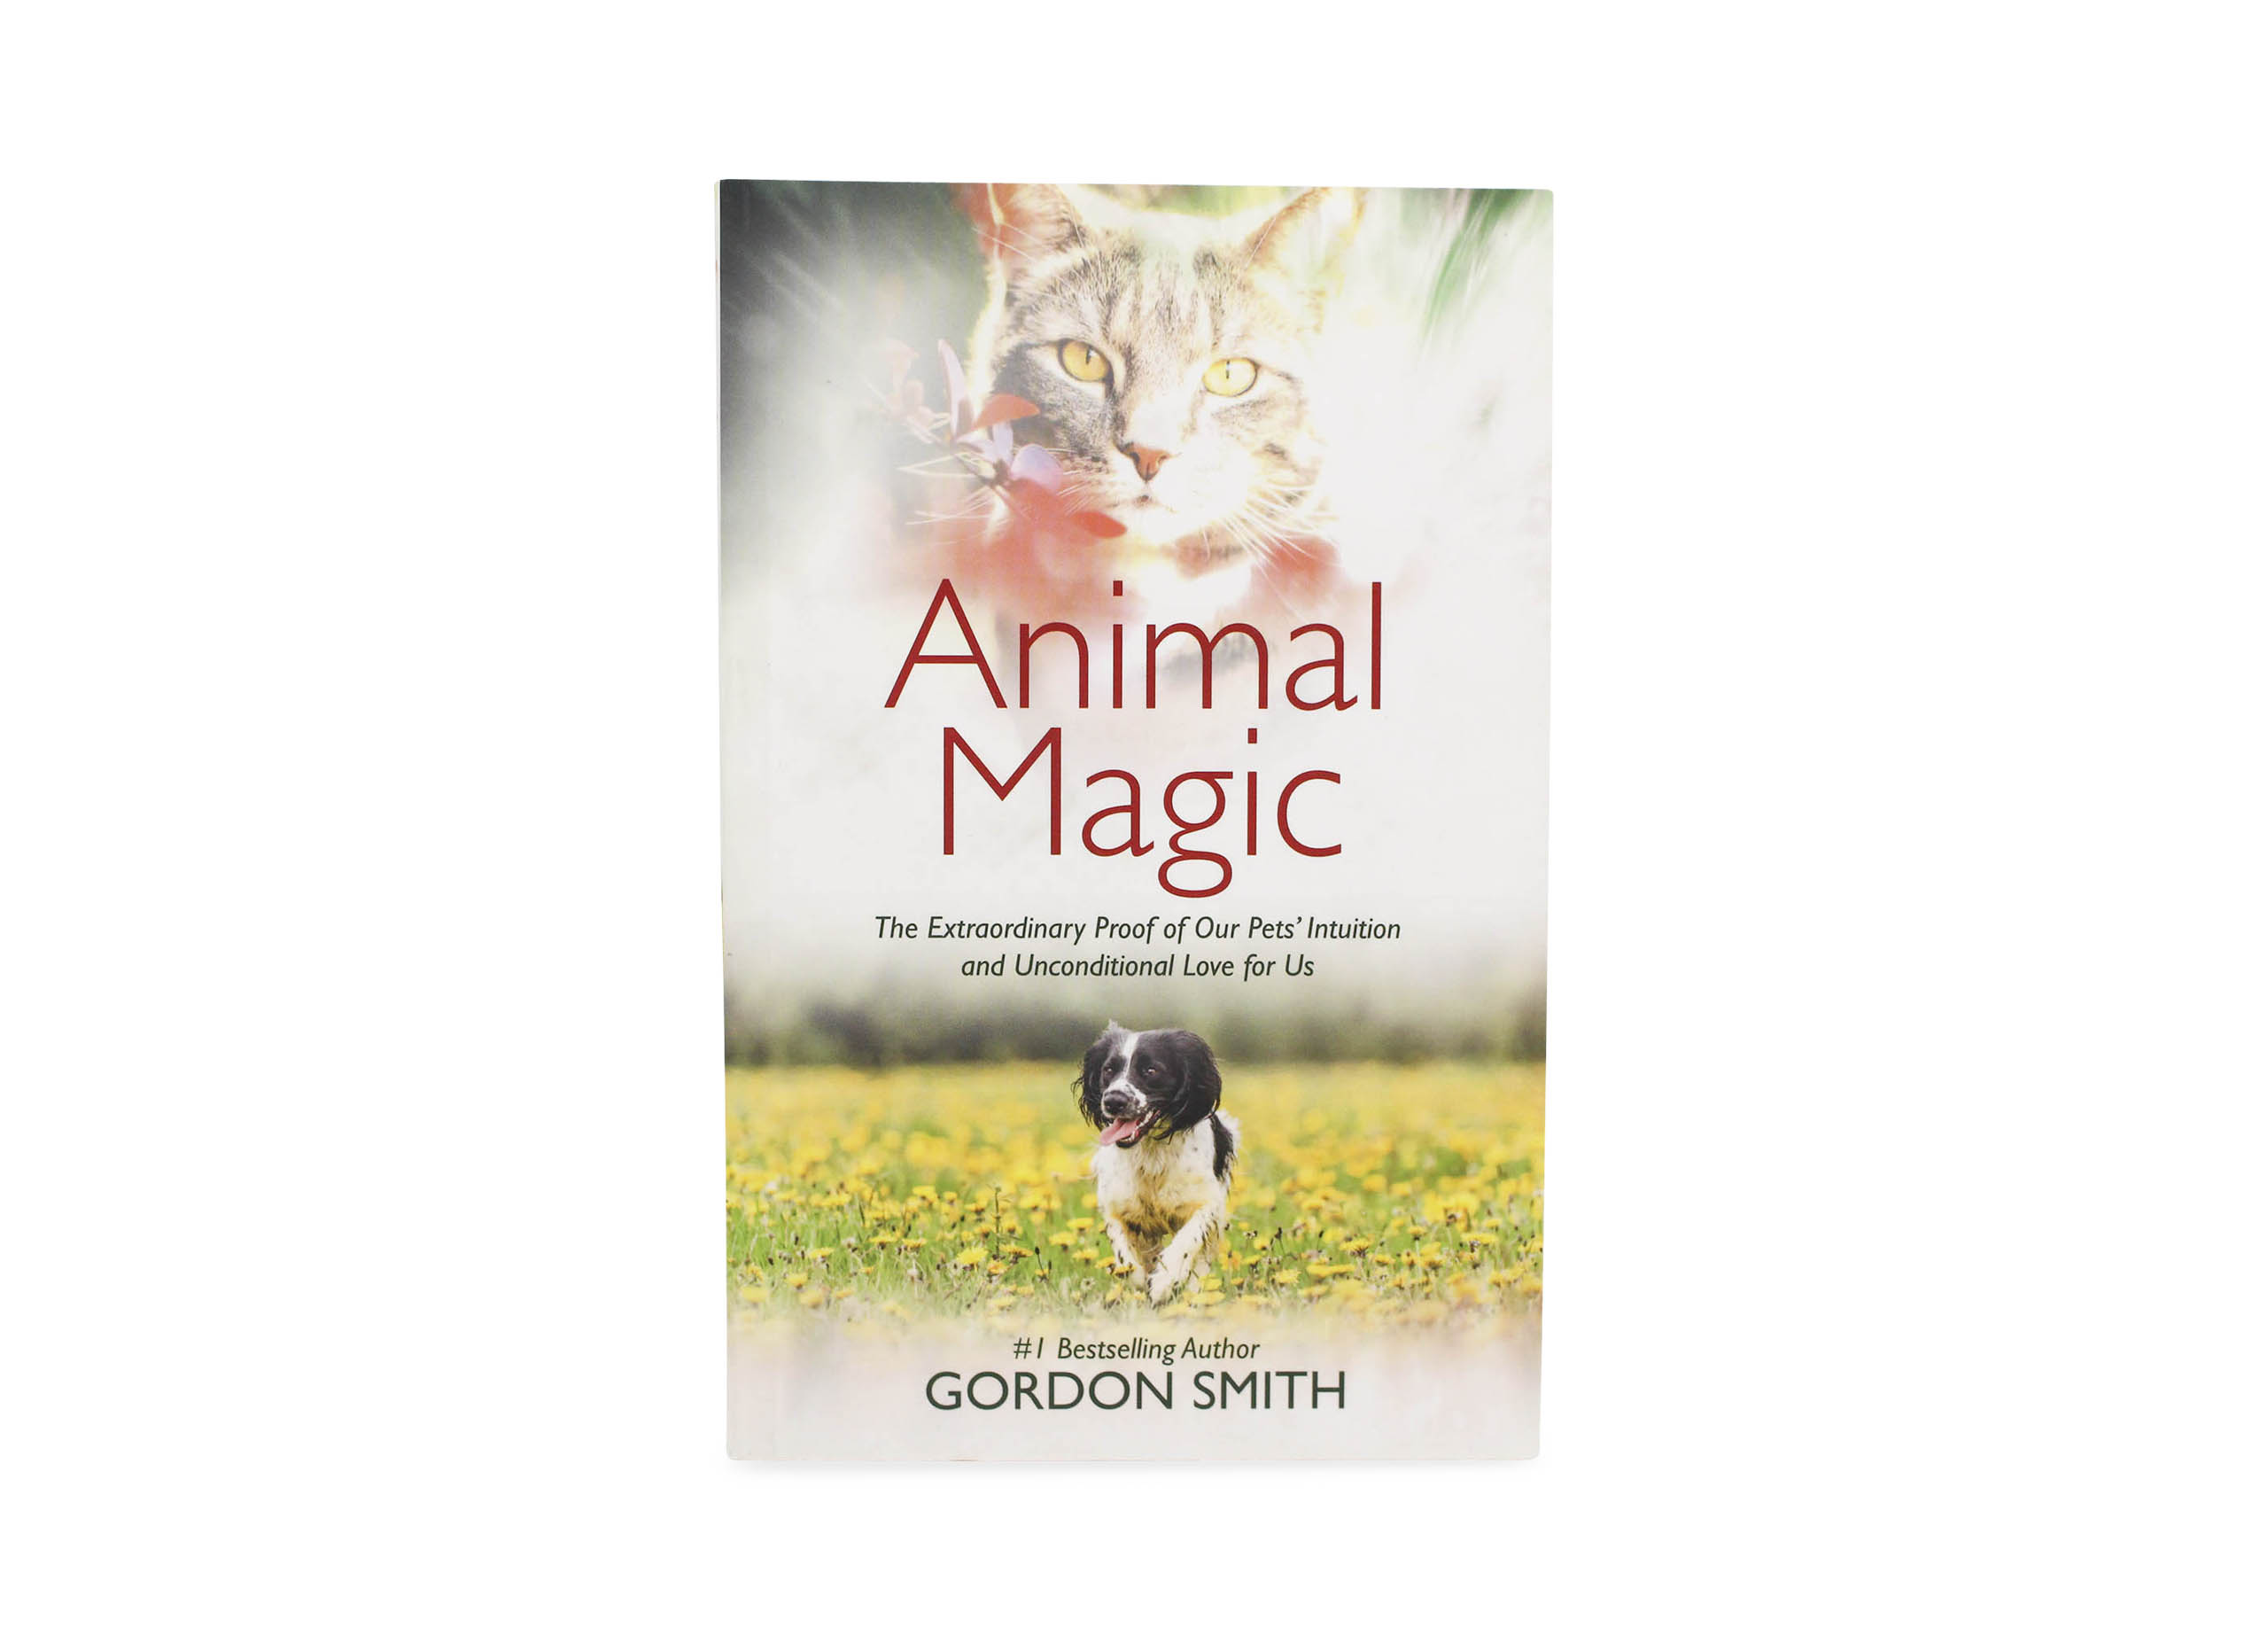 Animal Magic Book - Crystal Dreams World